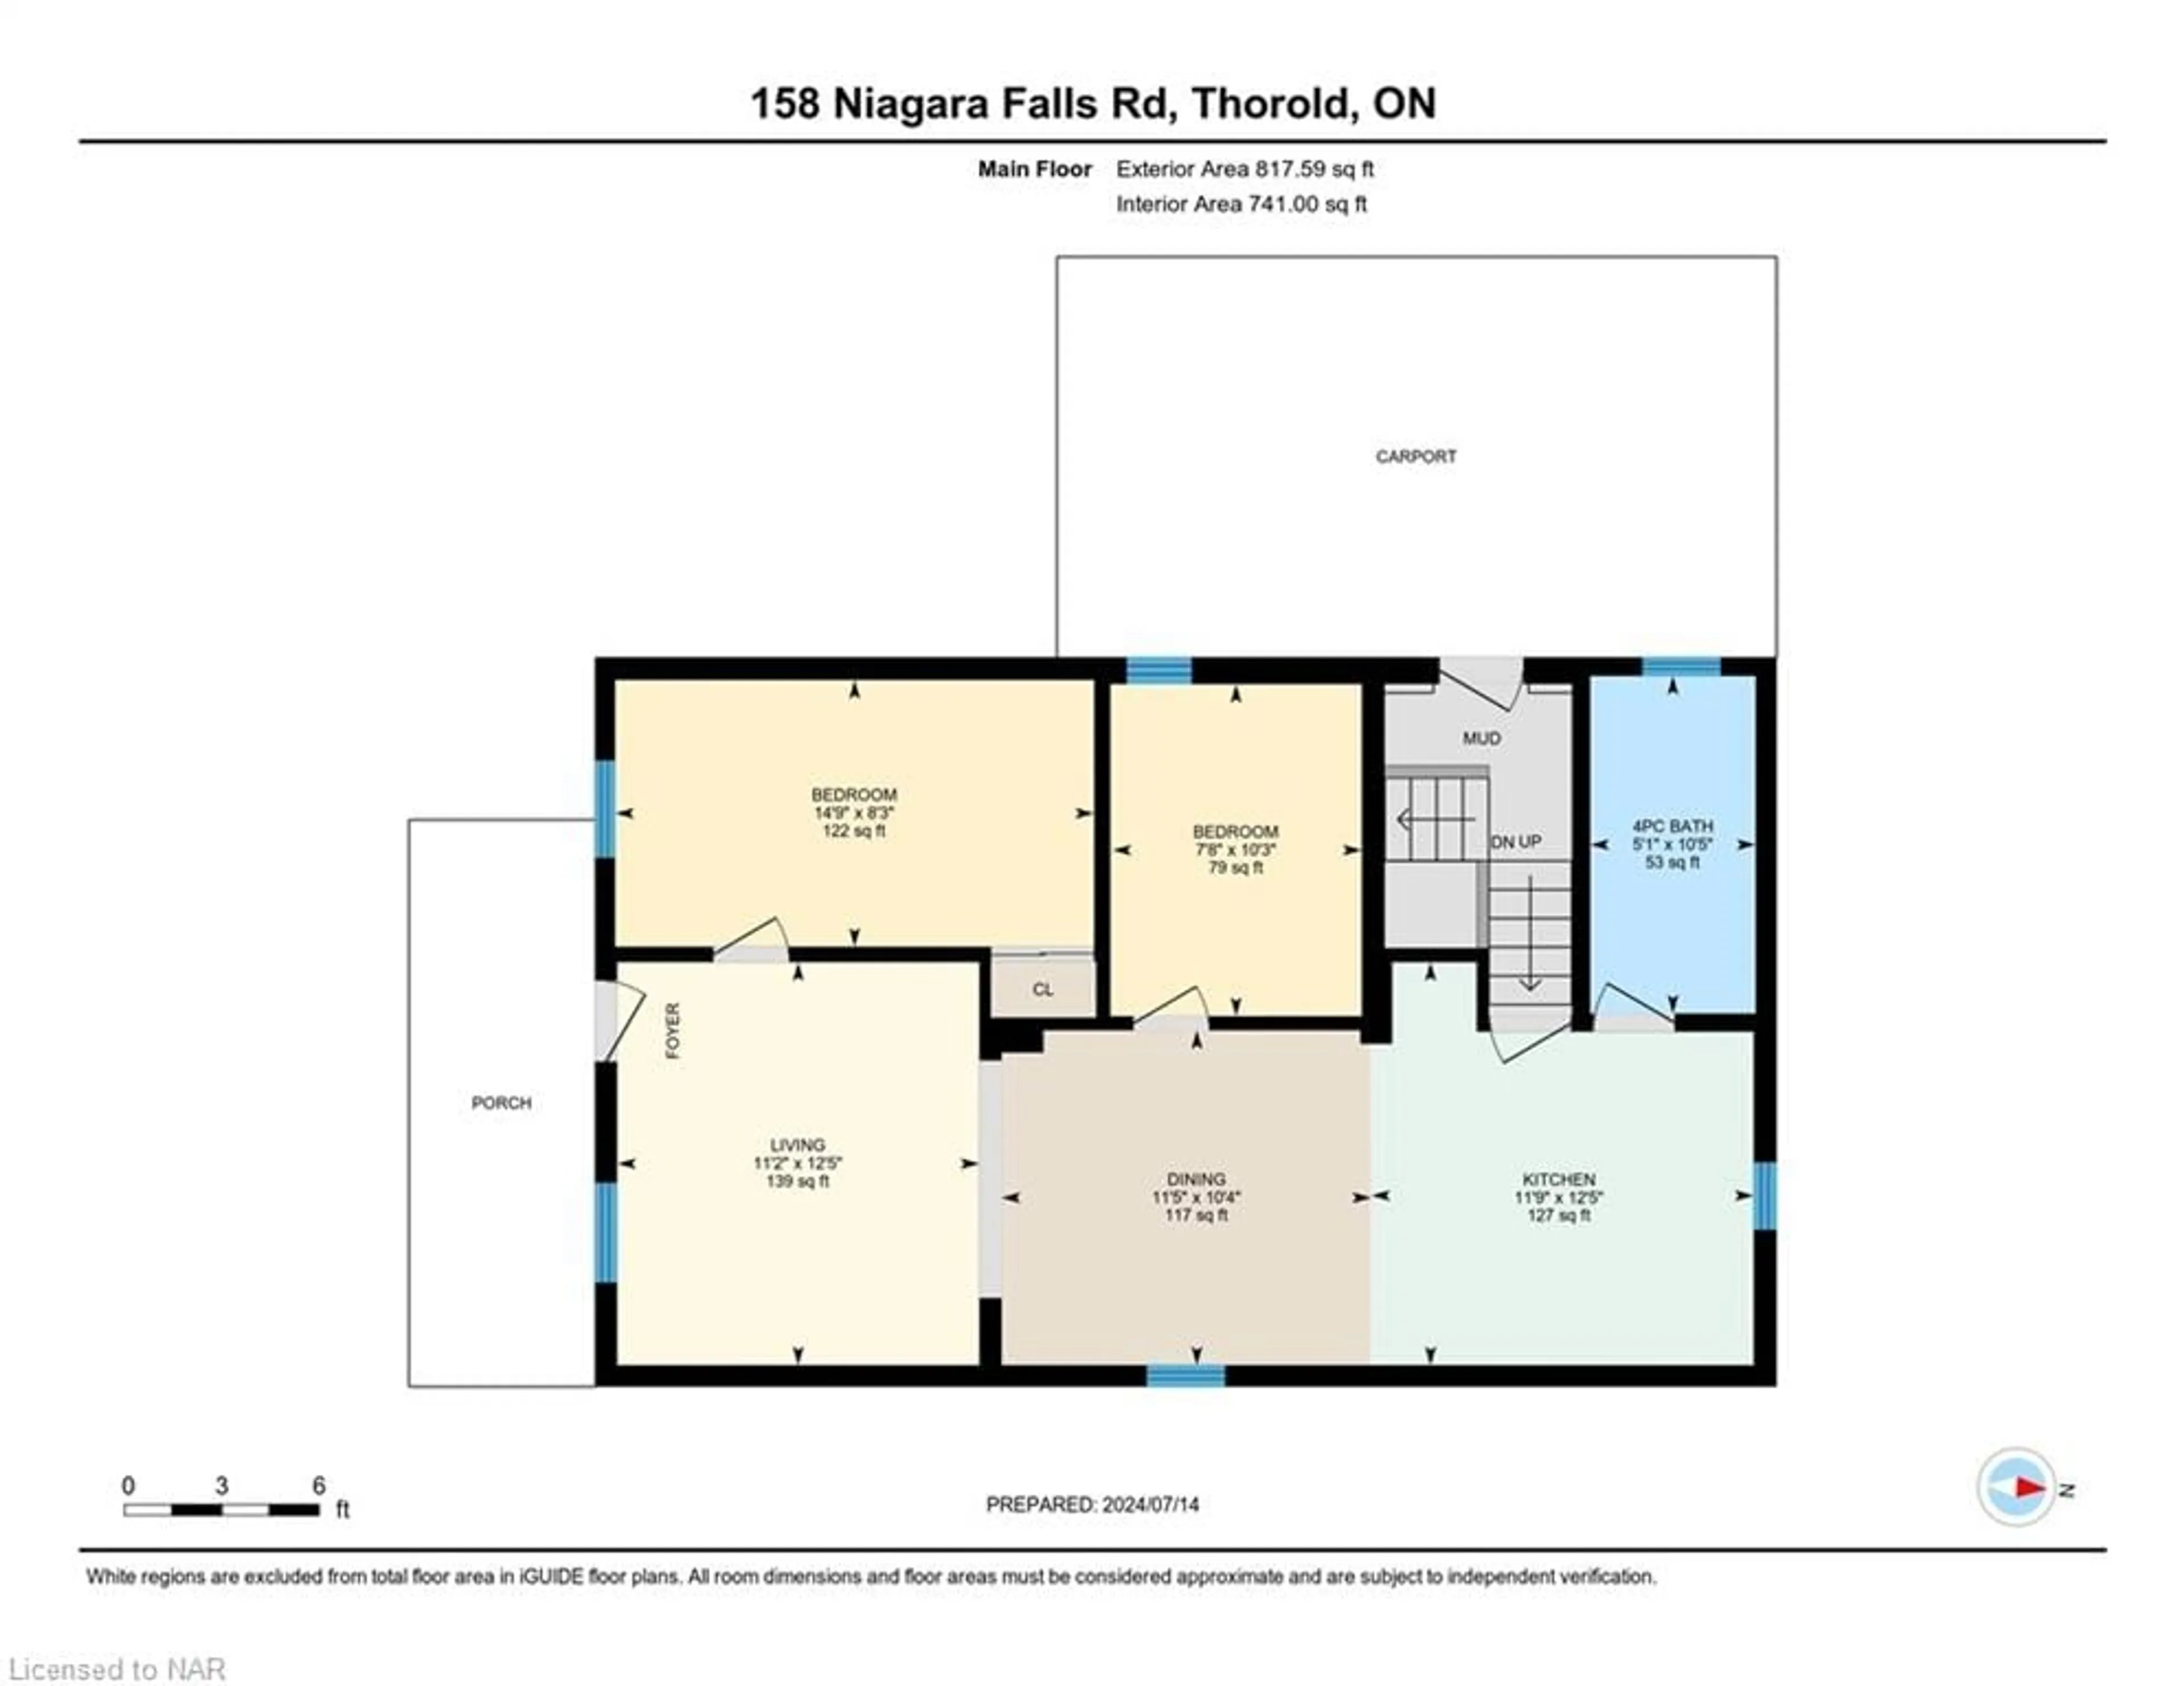 Floor plan for 158 Niagara Falls Rd, Thorold Ontario L2V 1H6